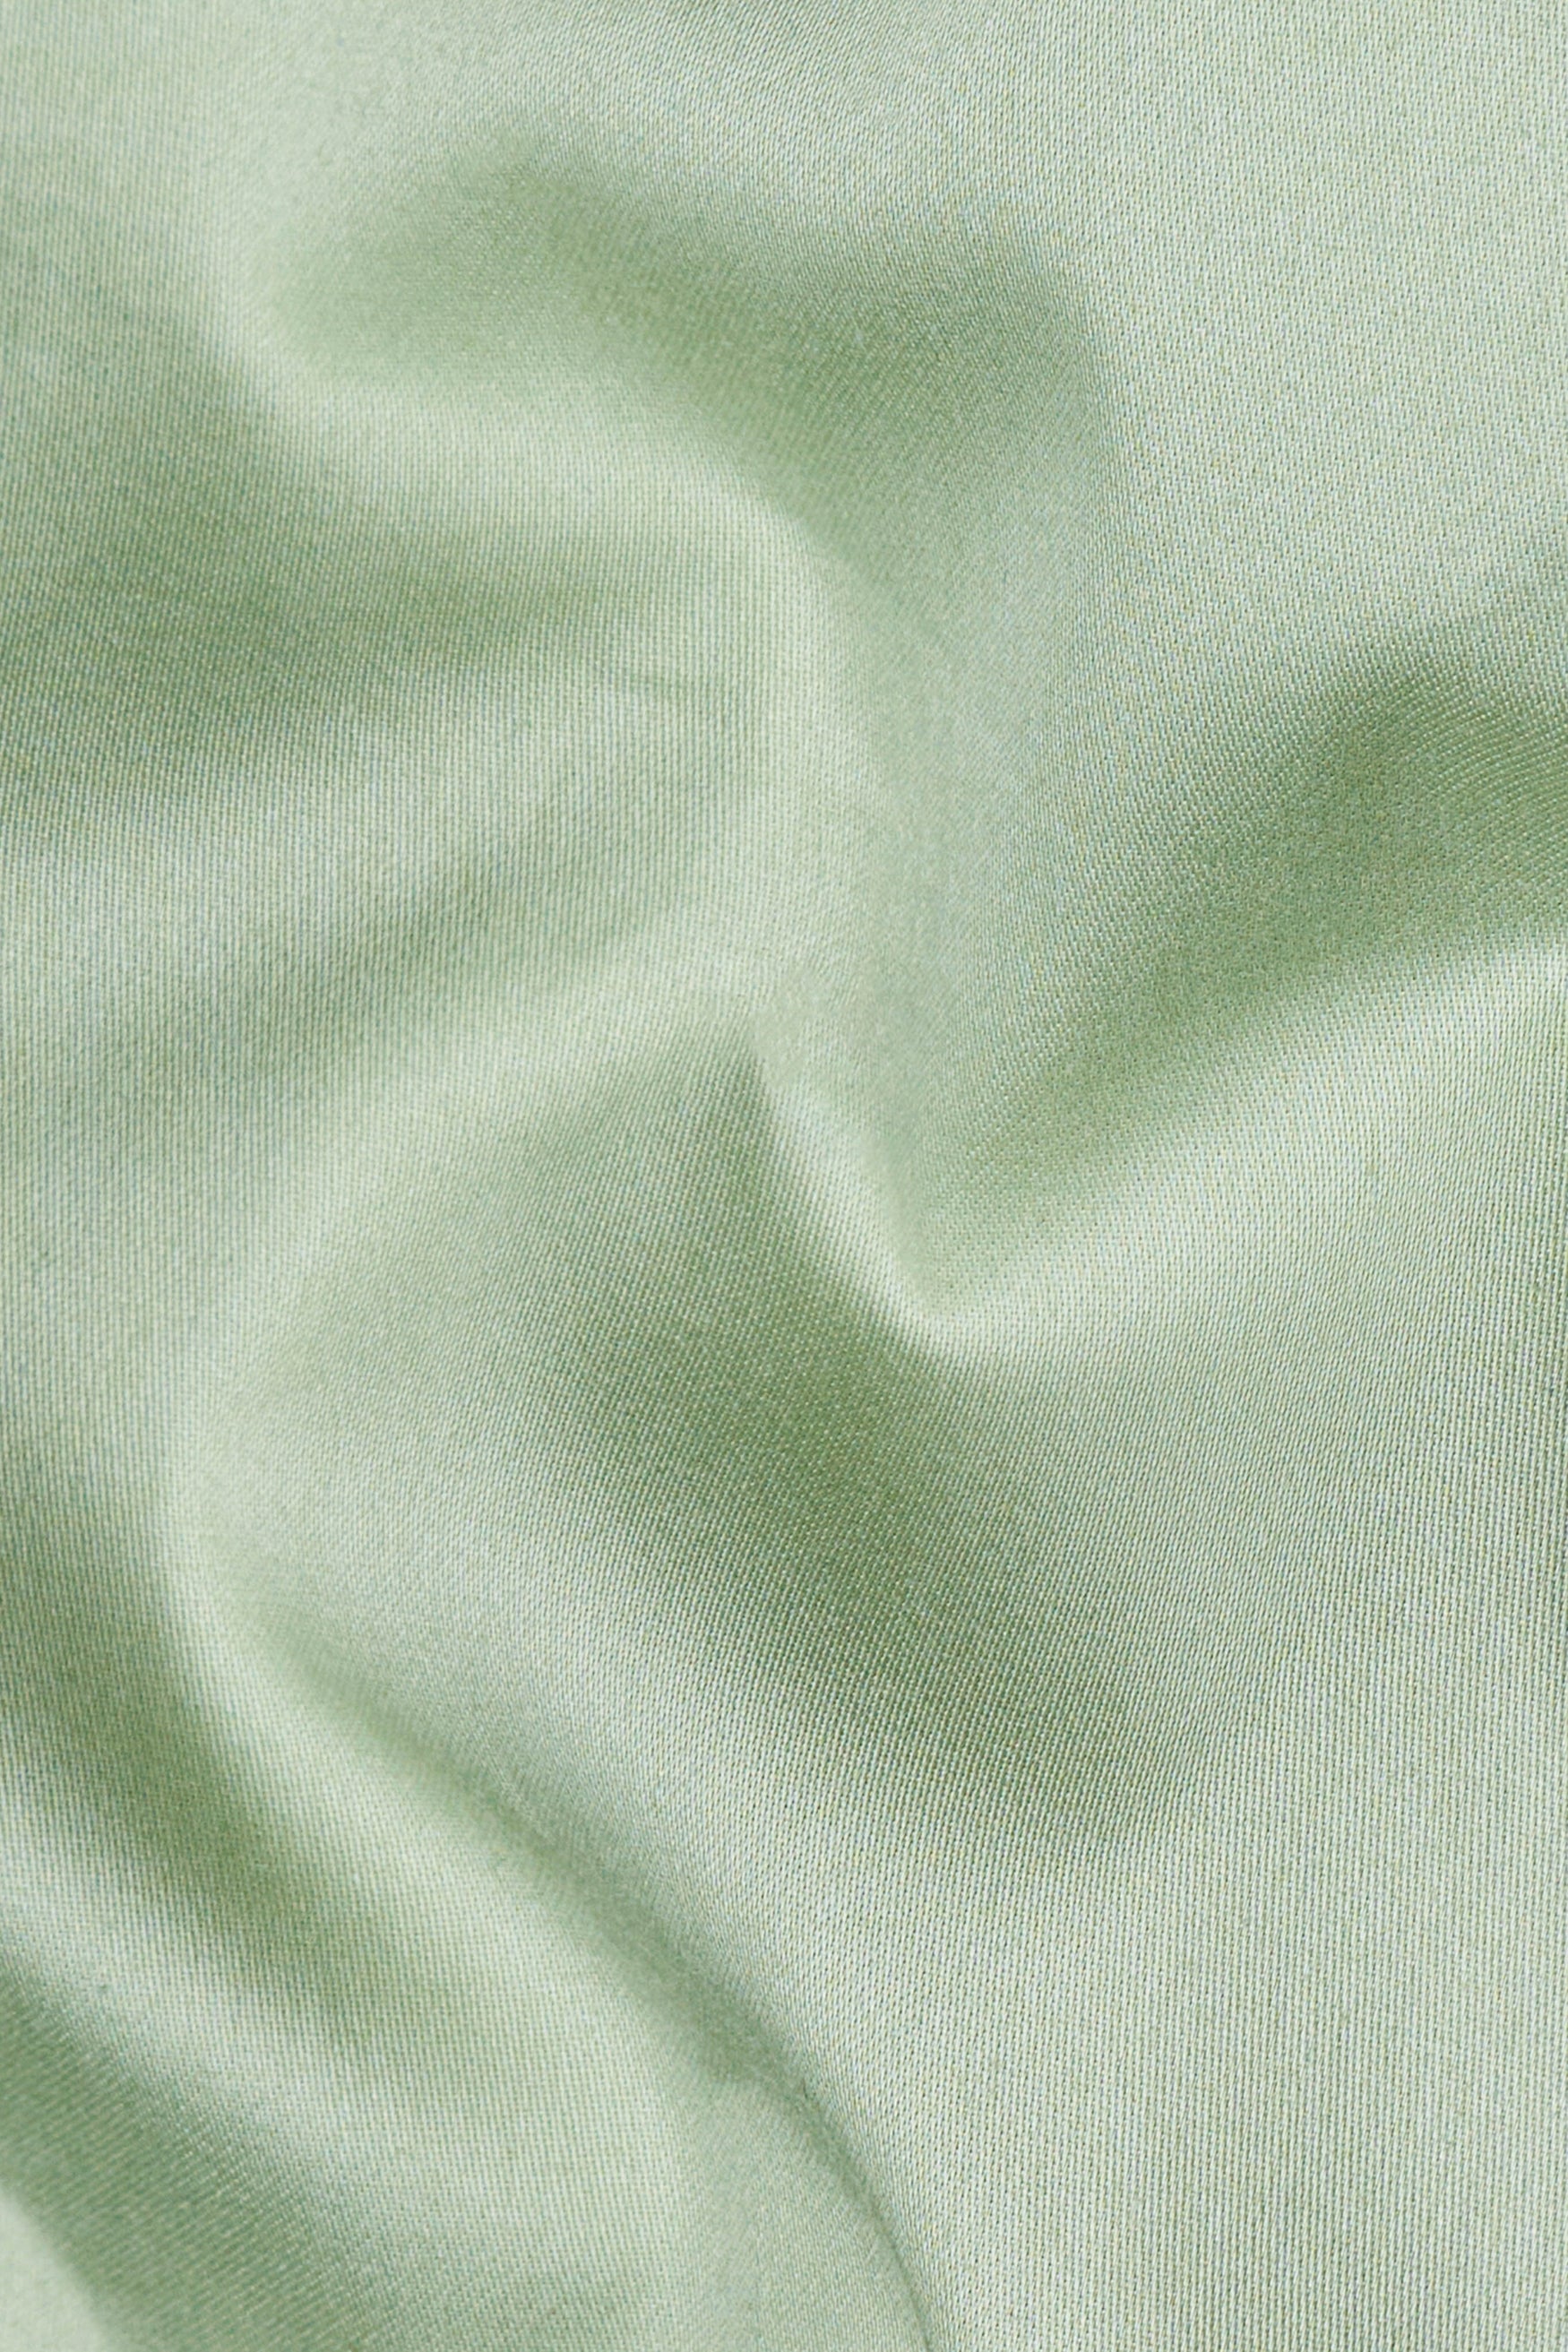 Coriander Green Subtle Sheen Super Soft Premium Cotton Pathani